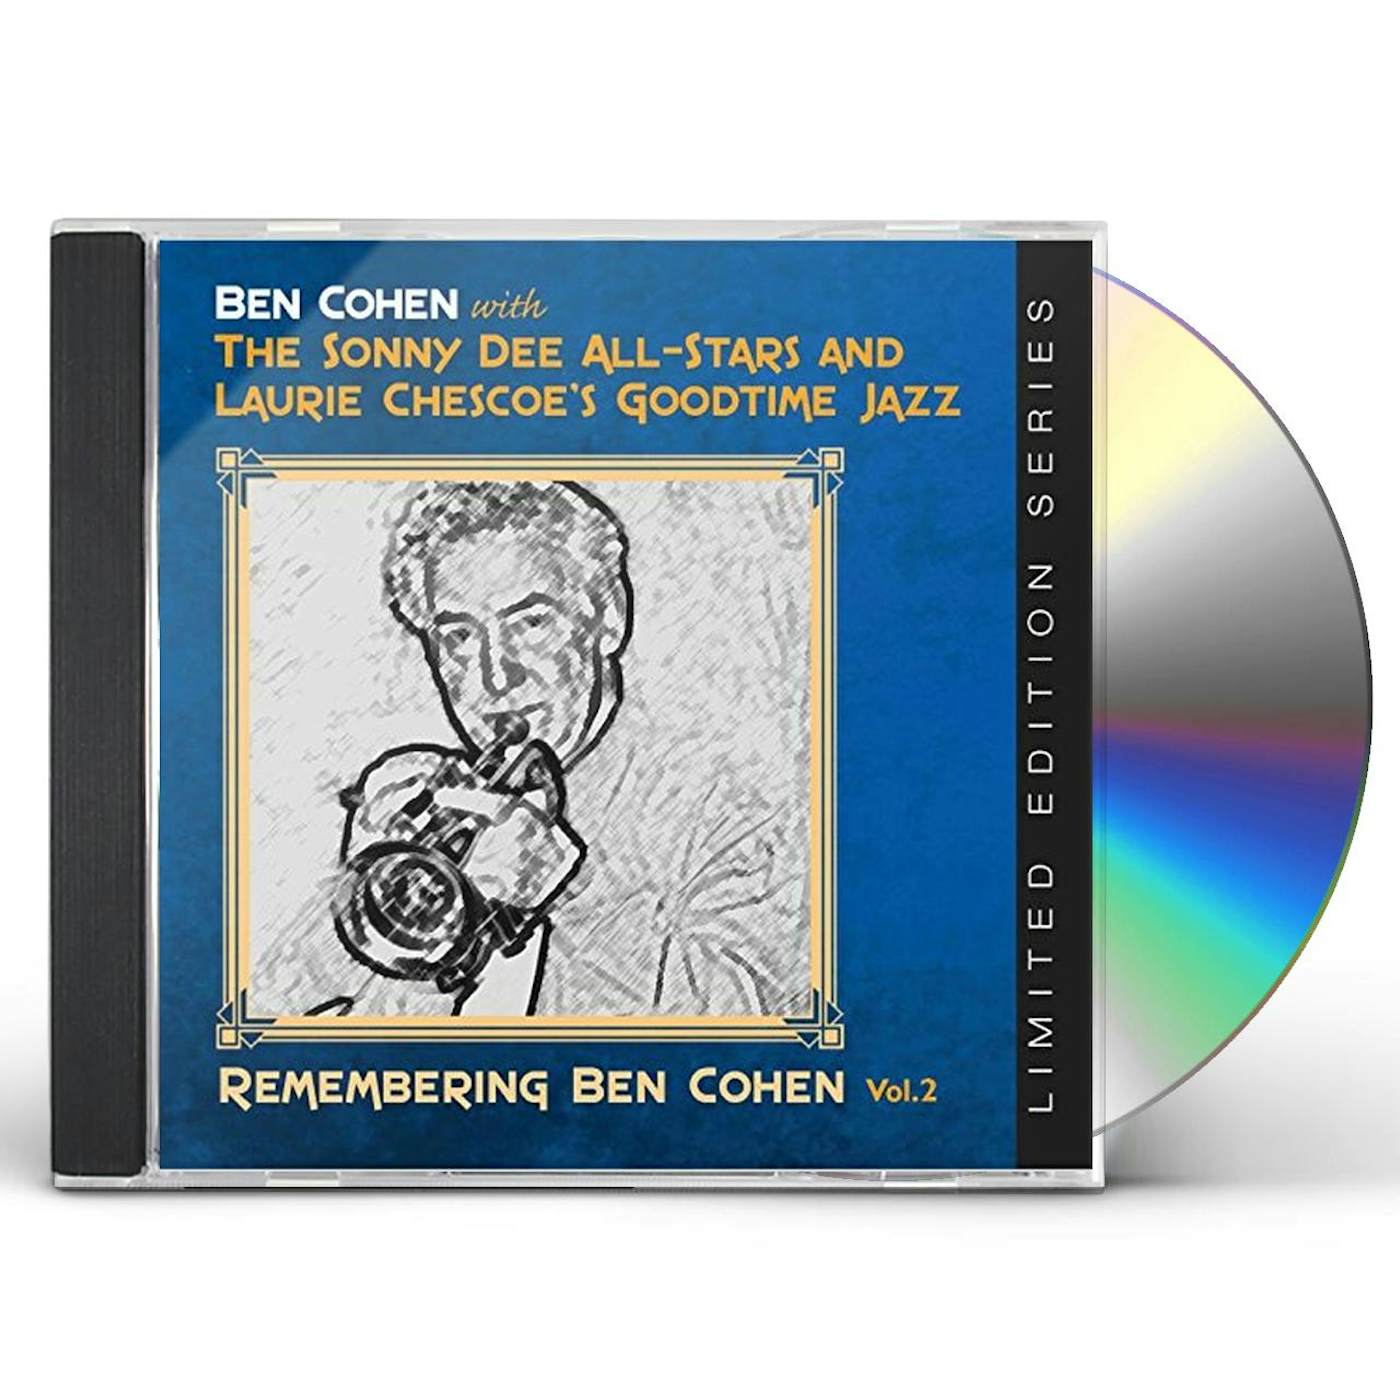 REMEMBERING BEN COHEN VOL 2 CD